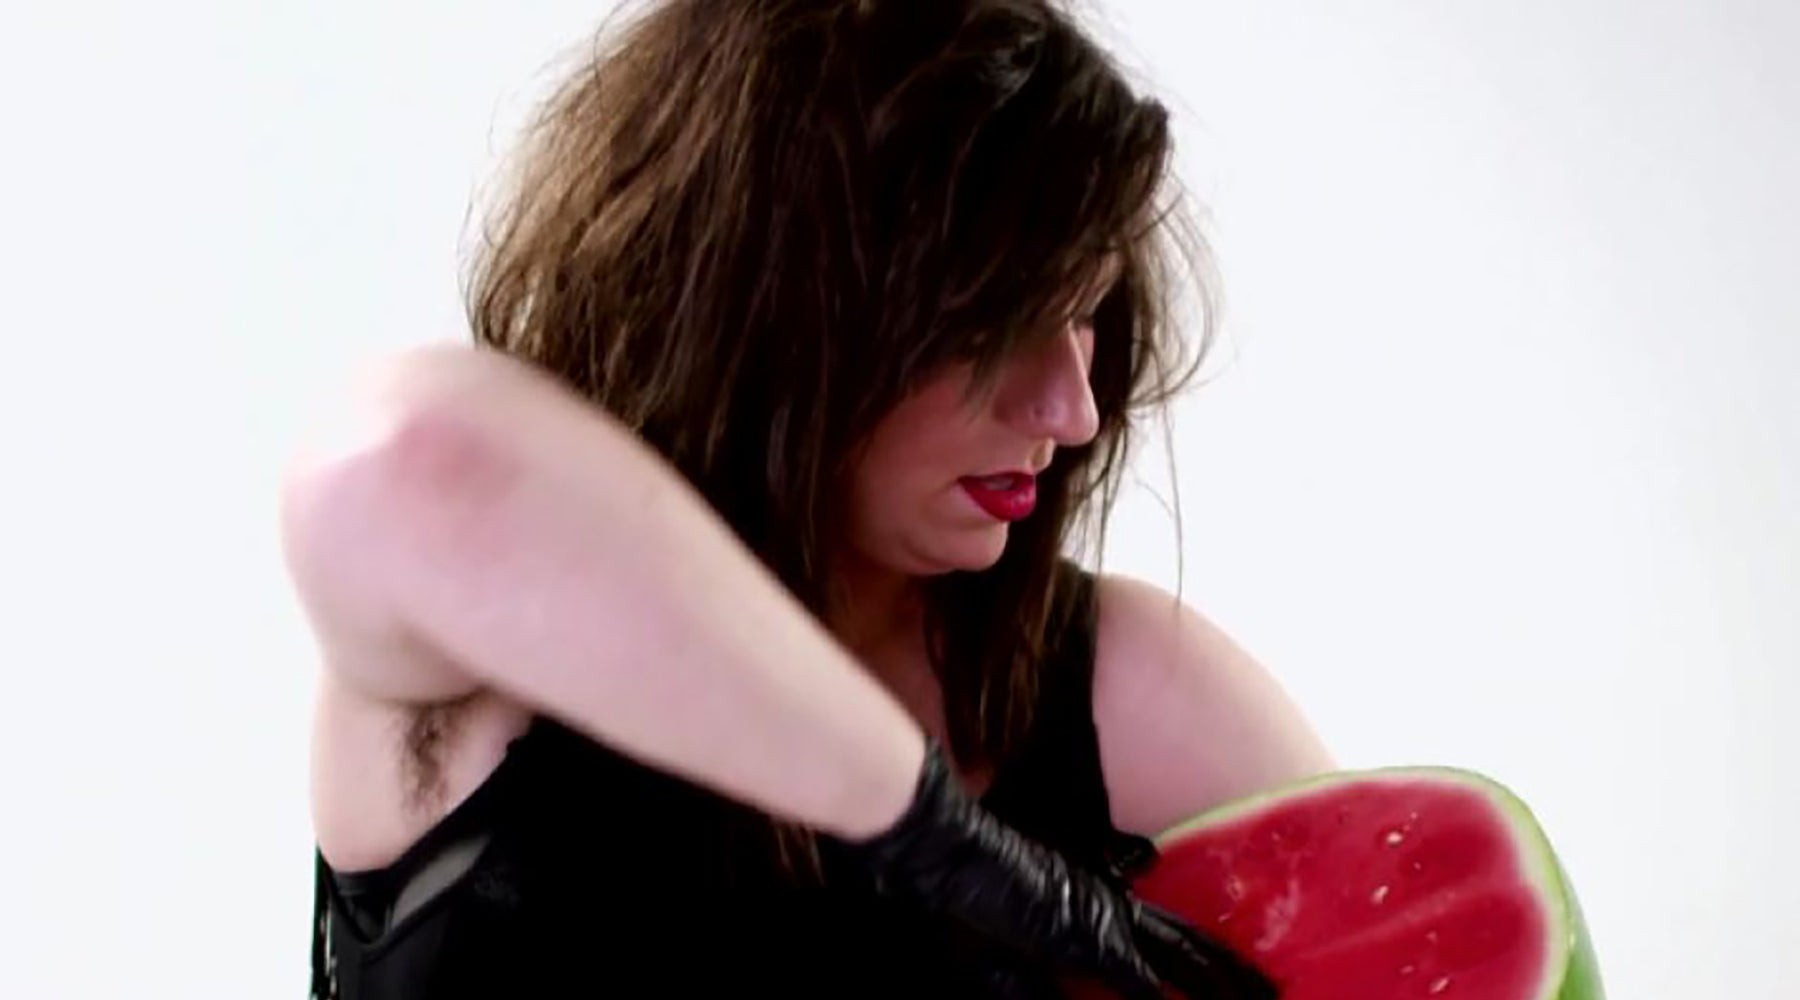 Maeve Marsden wearing black latex glove fisting watermelon - still from Lady Sings It Better x CLAUDE campaign | Nikki Darling Australia